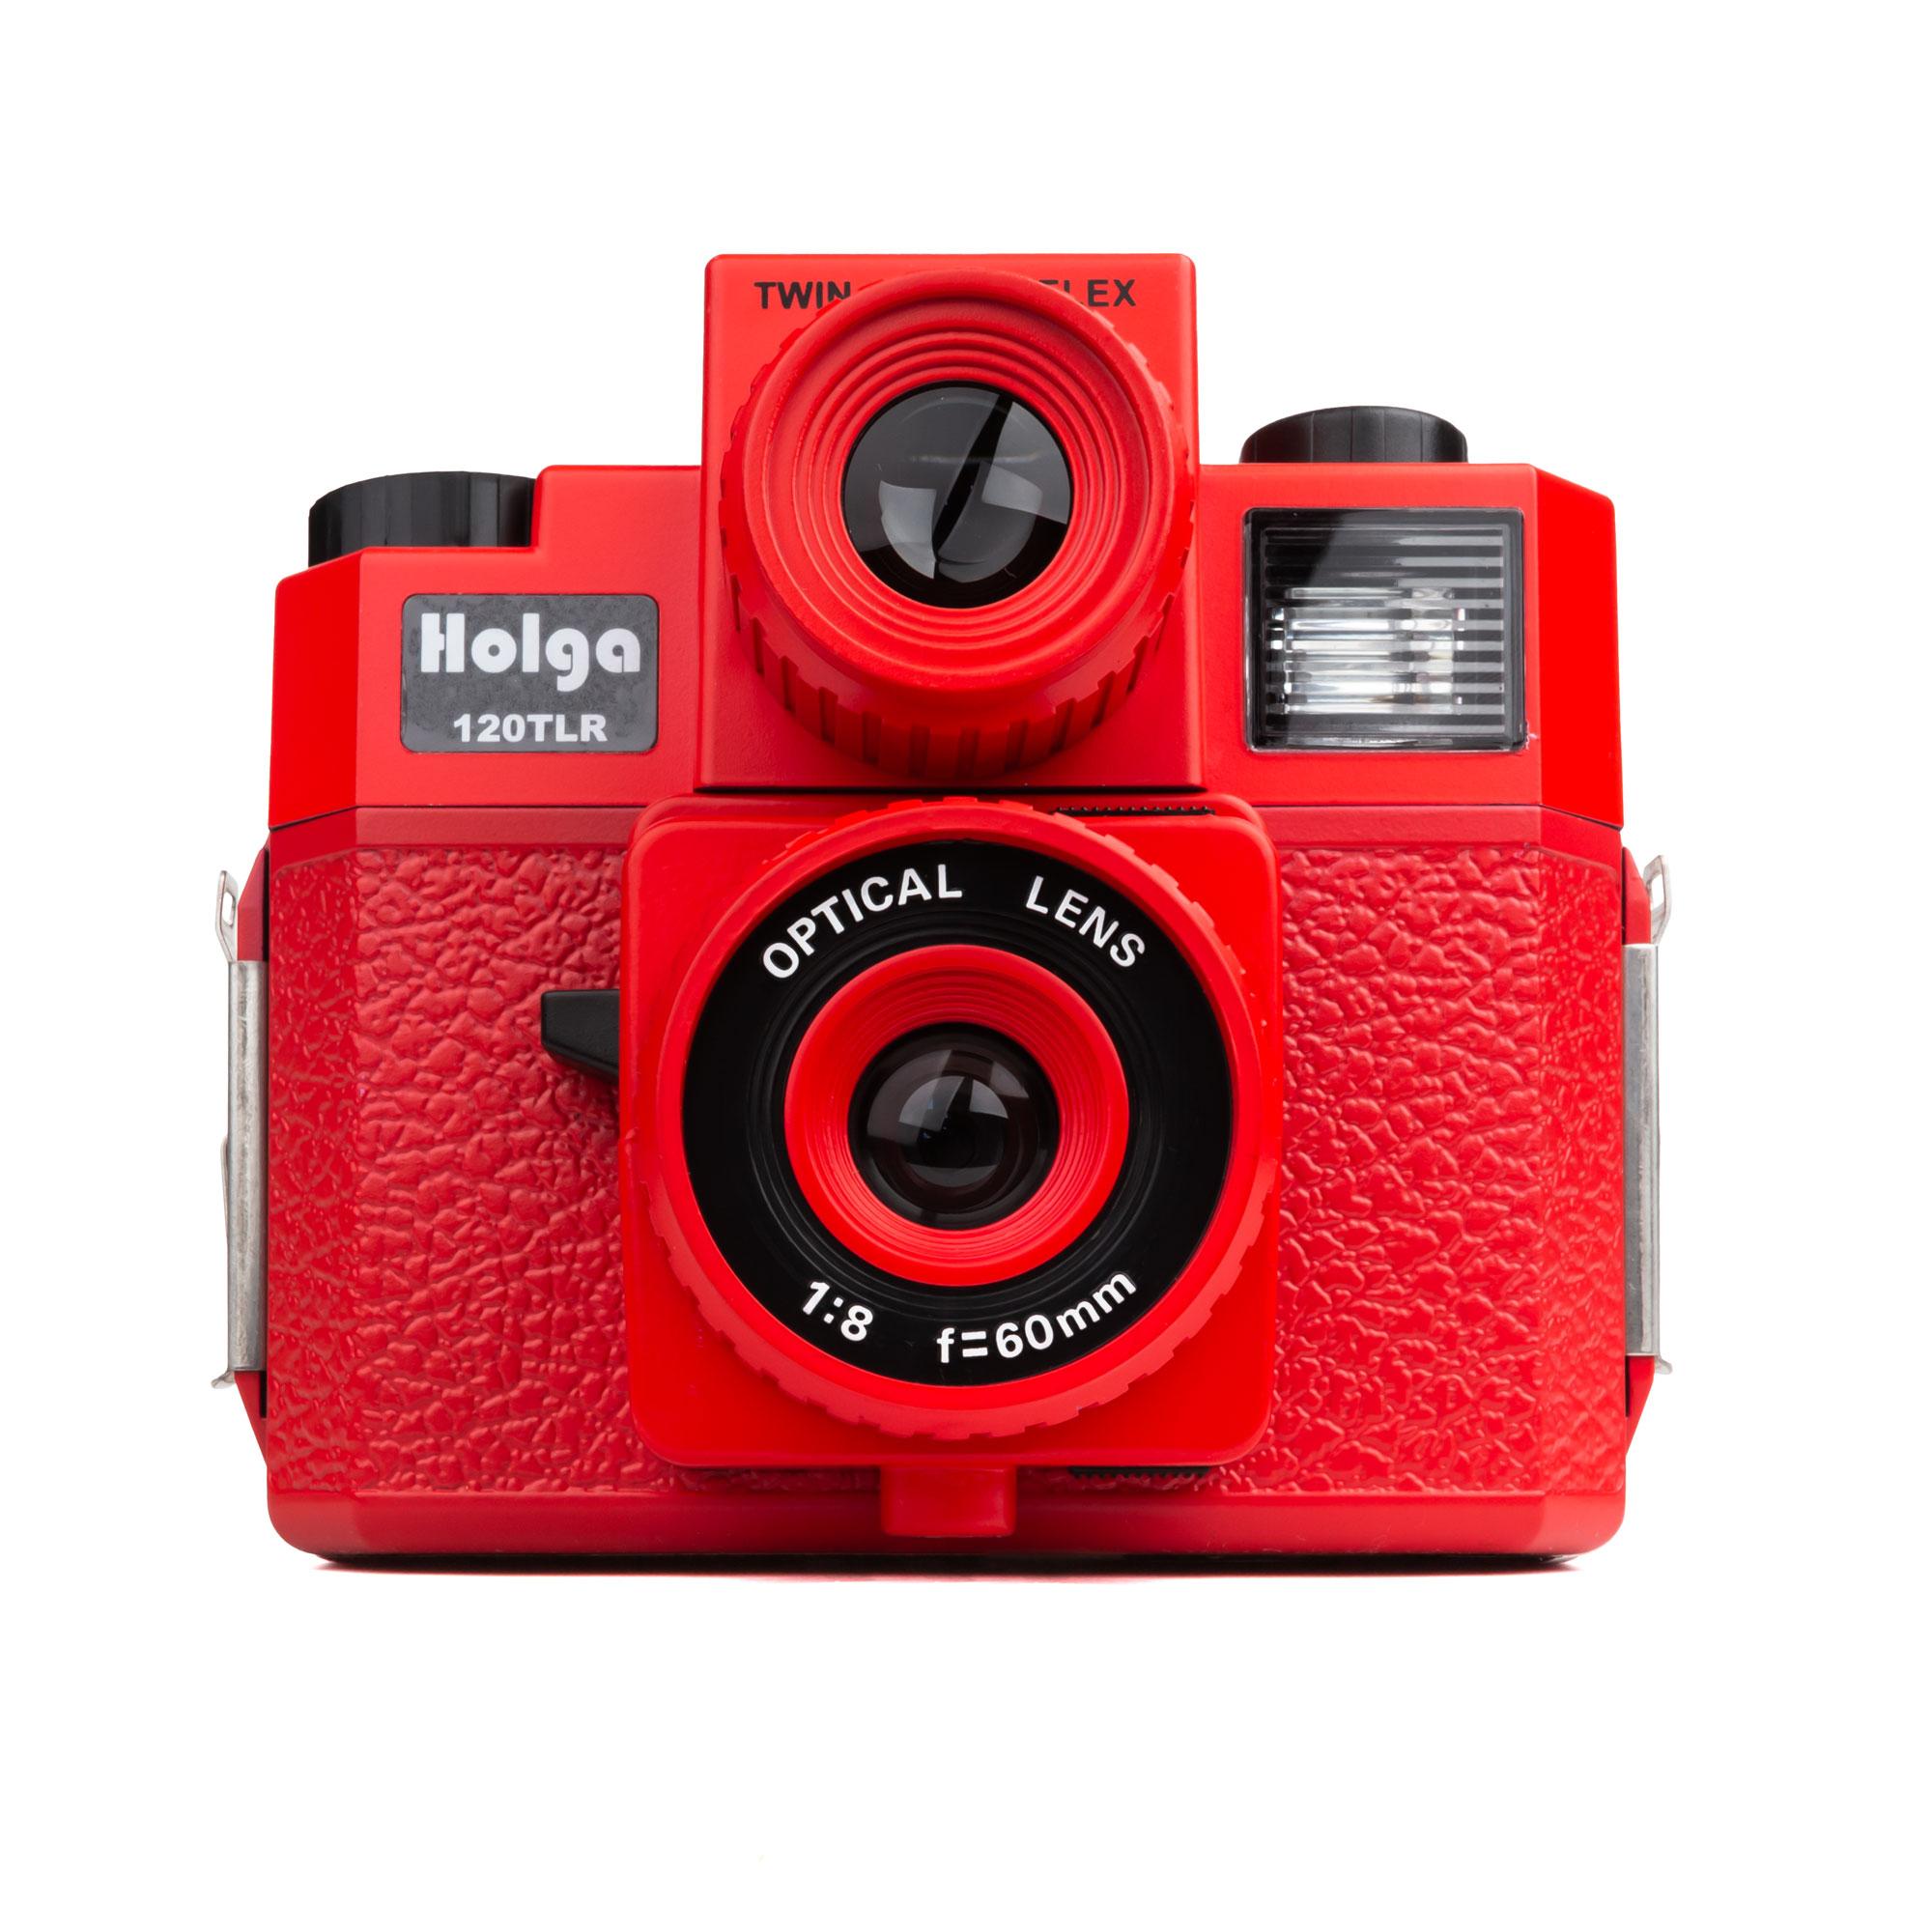 HOLGA 120 TLR appareil photo rouge twinlens avec flash